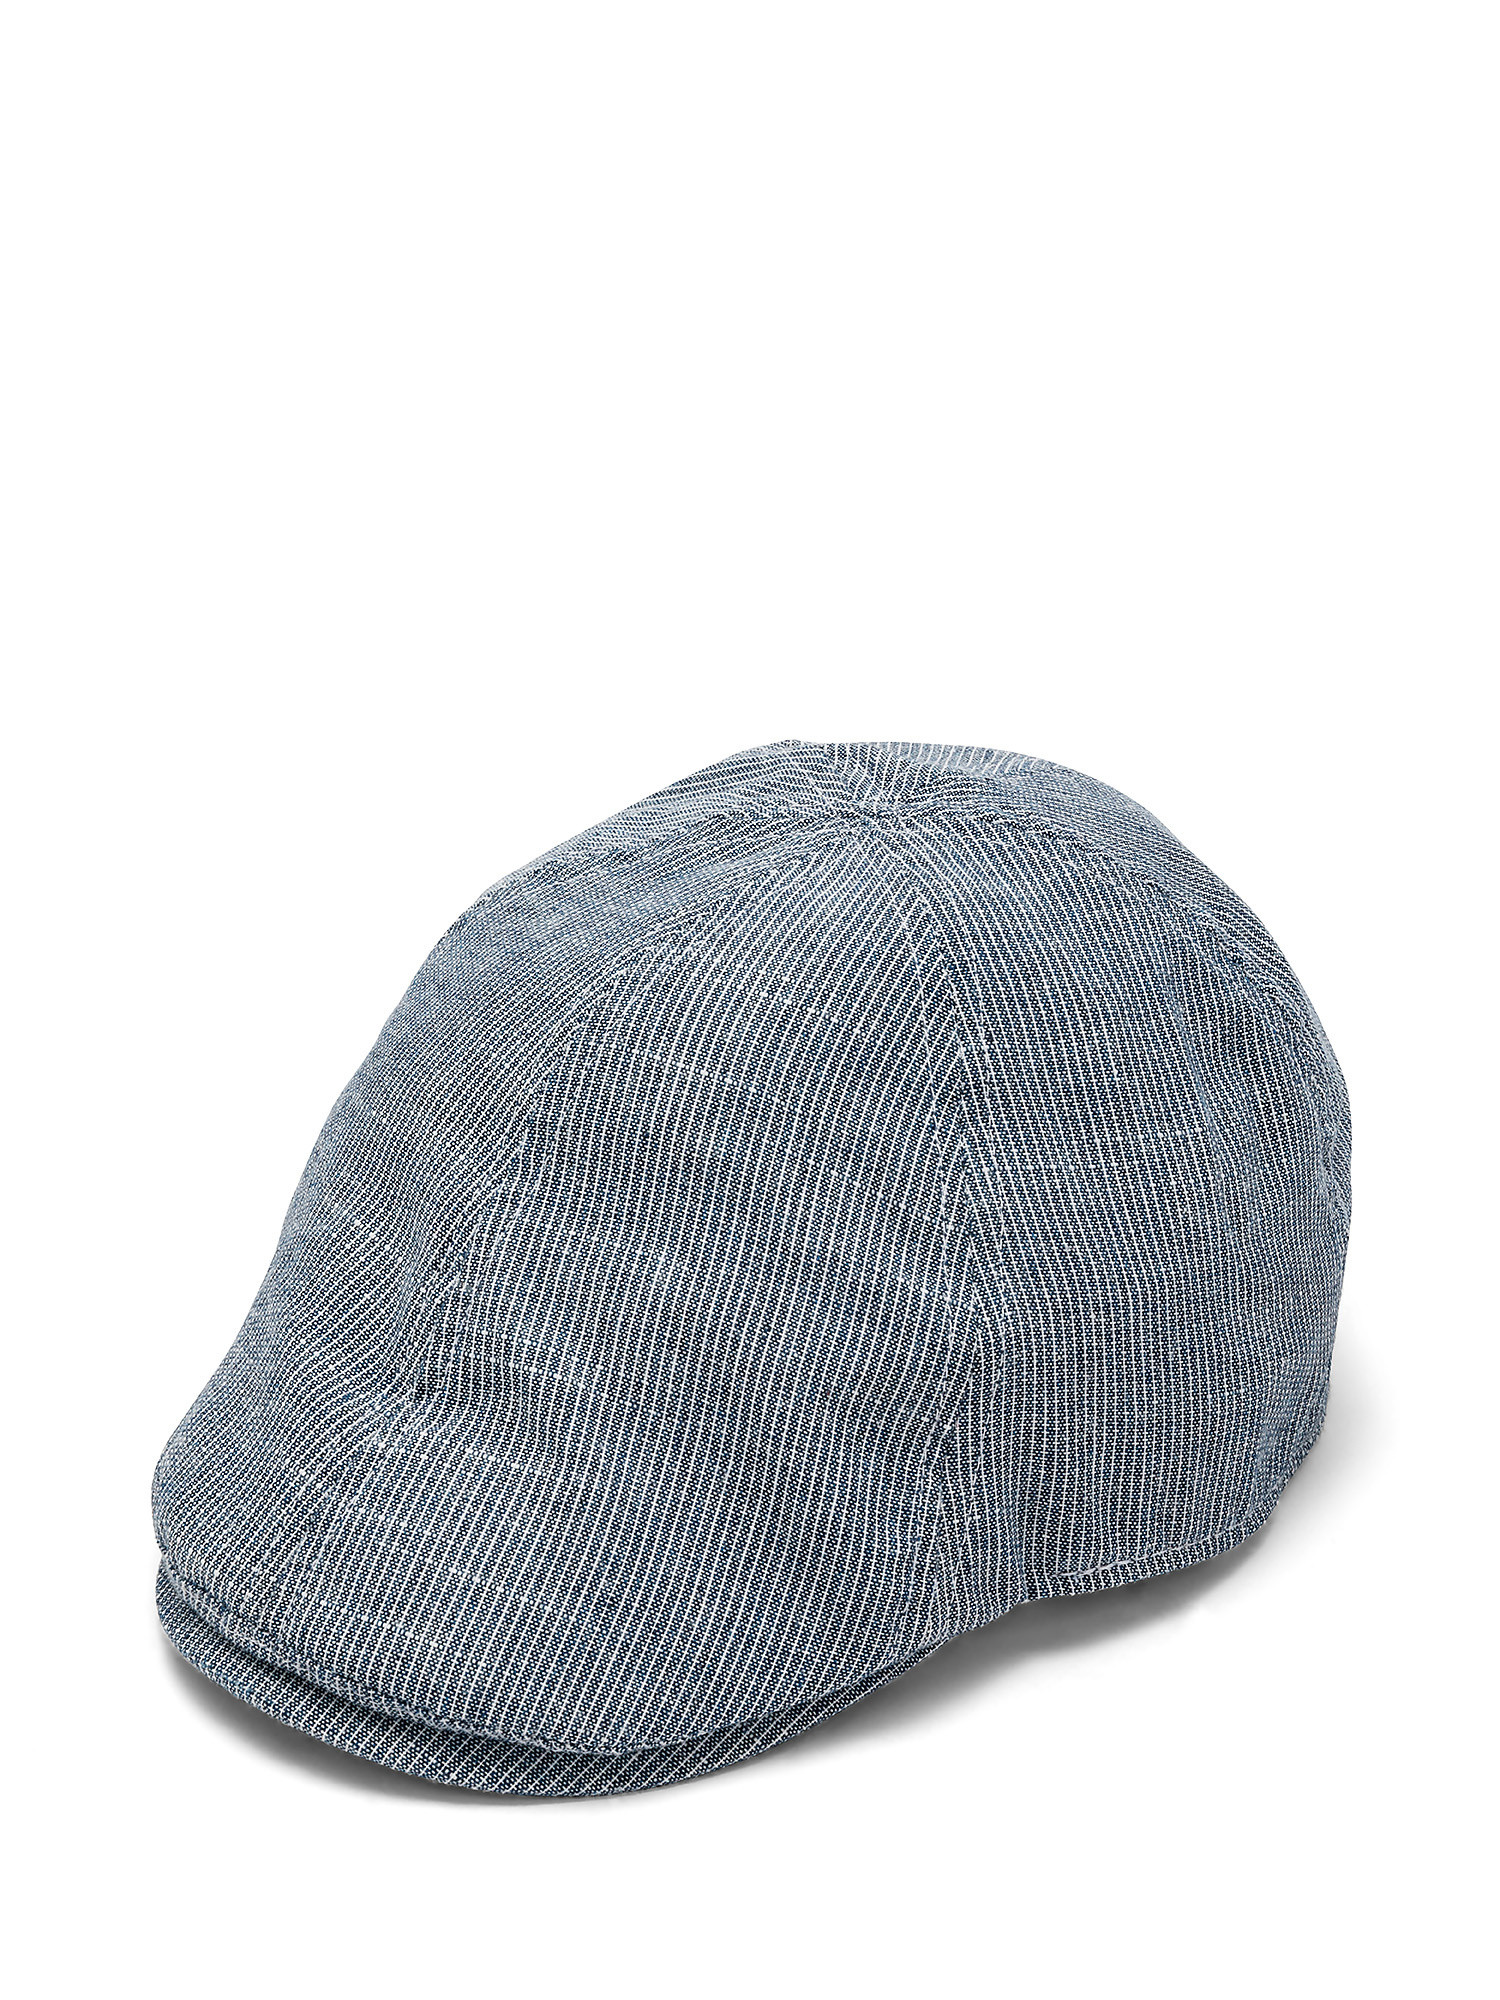 Luca D'Altieri - Striped hat, Light Blue, large image number 0